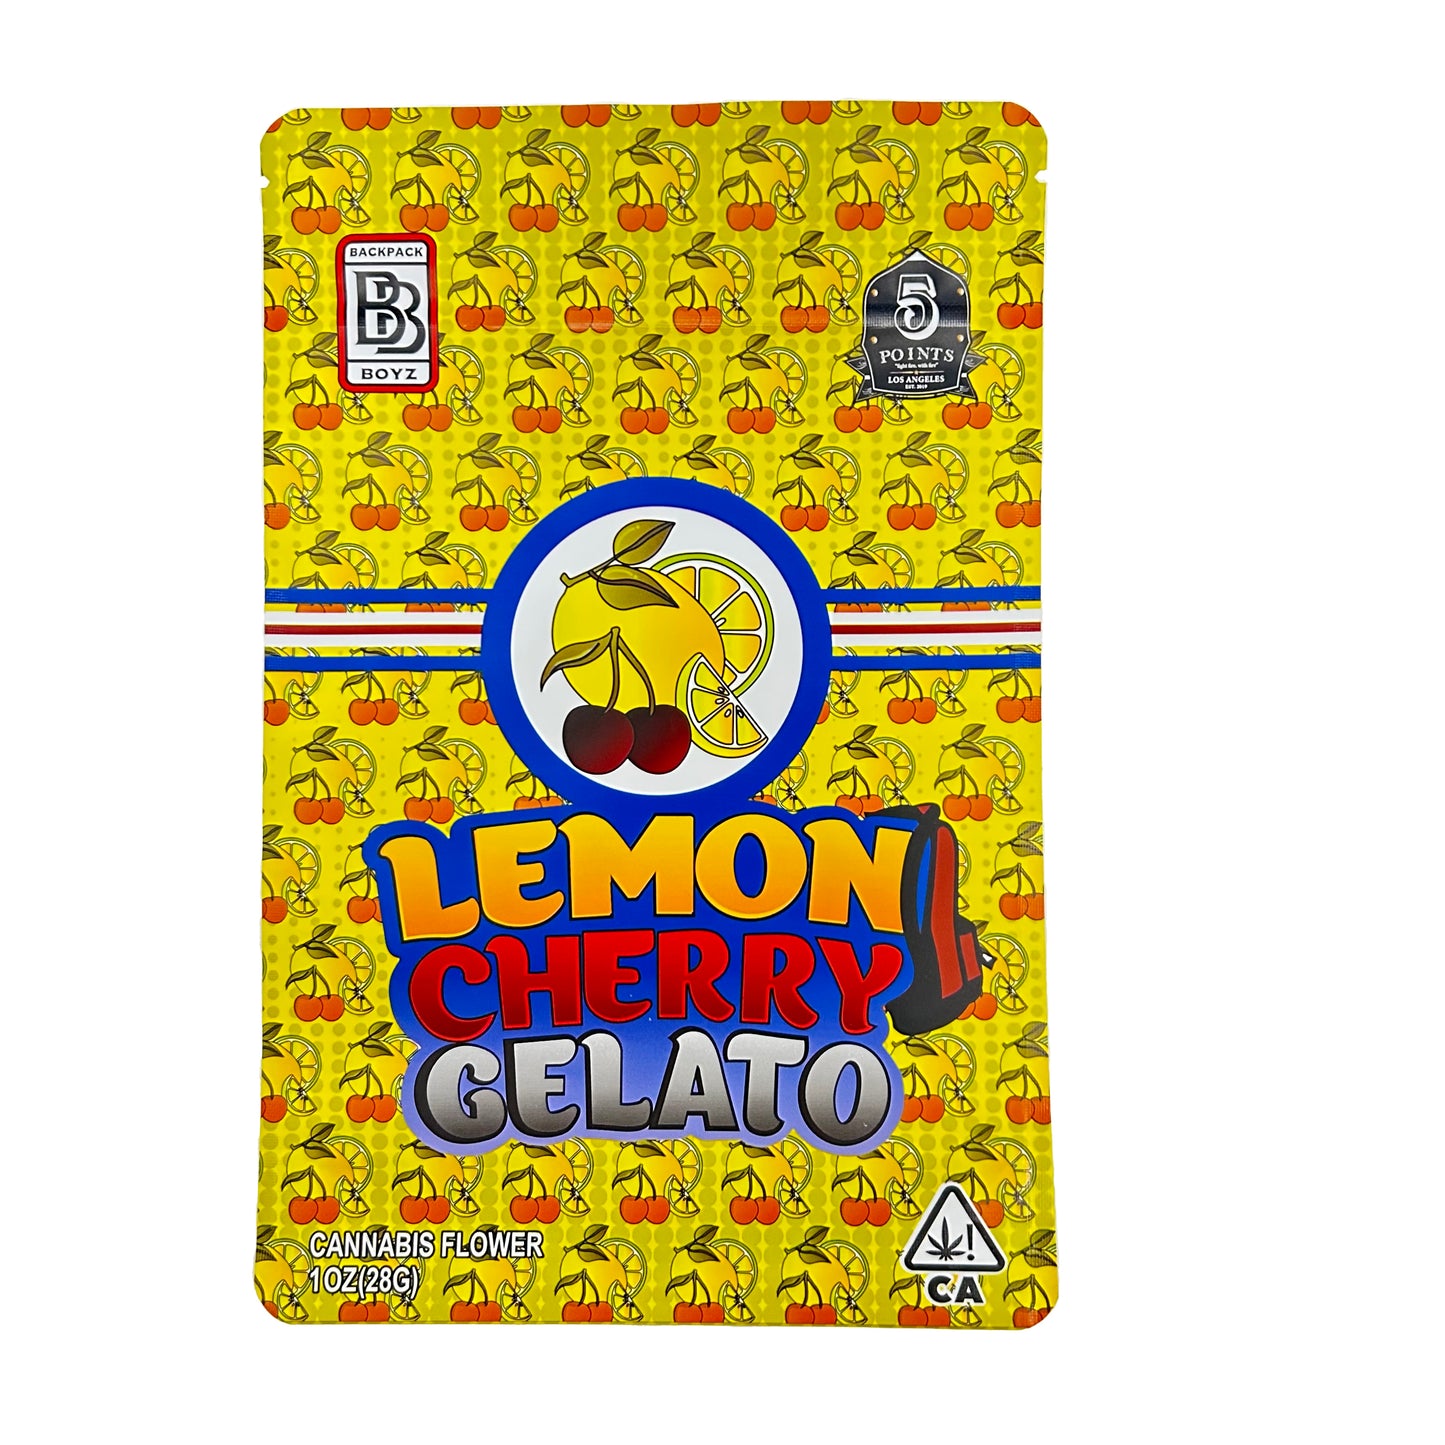 Lemon Cherry Gelato Backpack Boyz 1 oz Mylar Bag